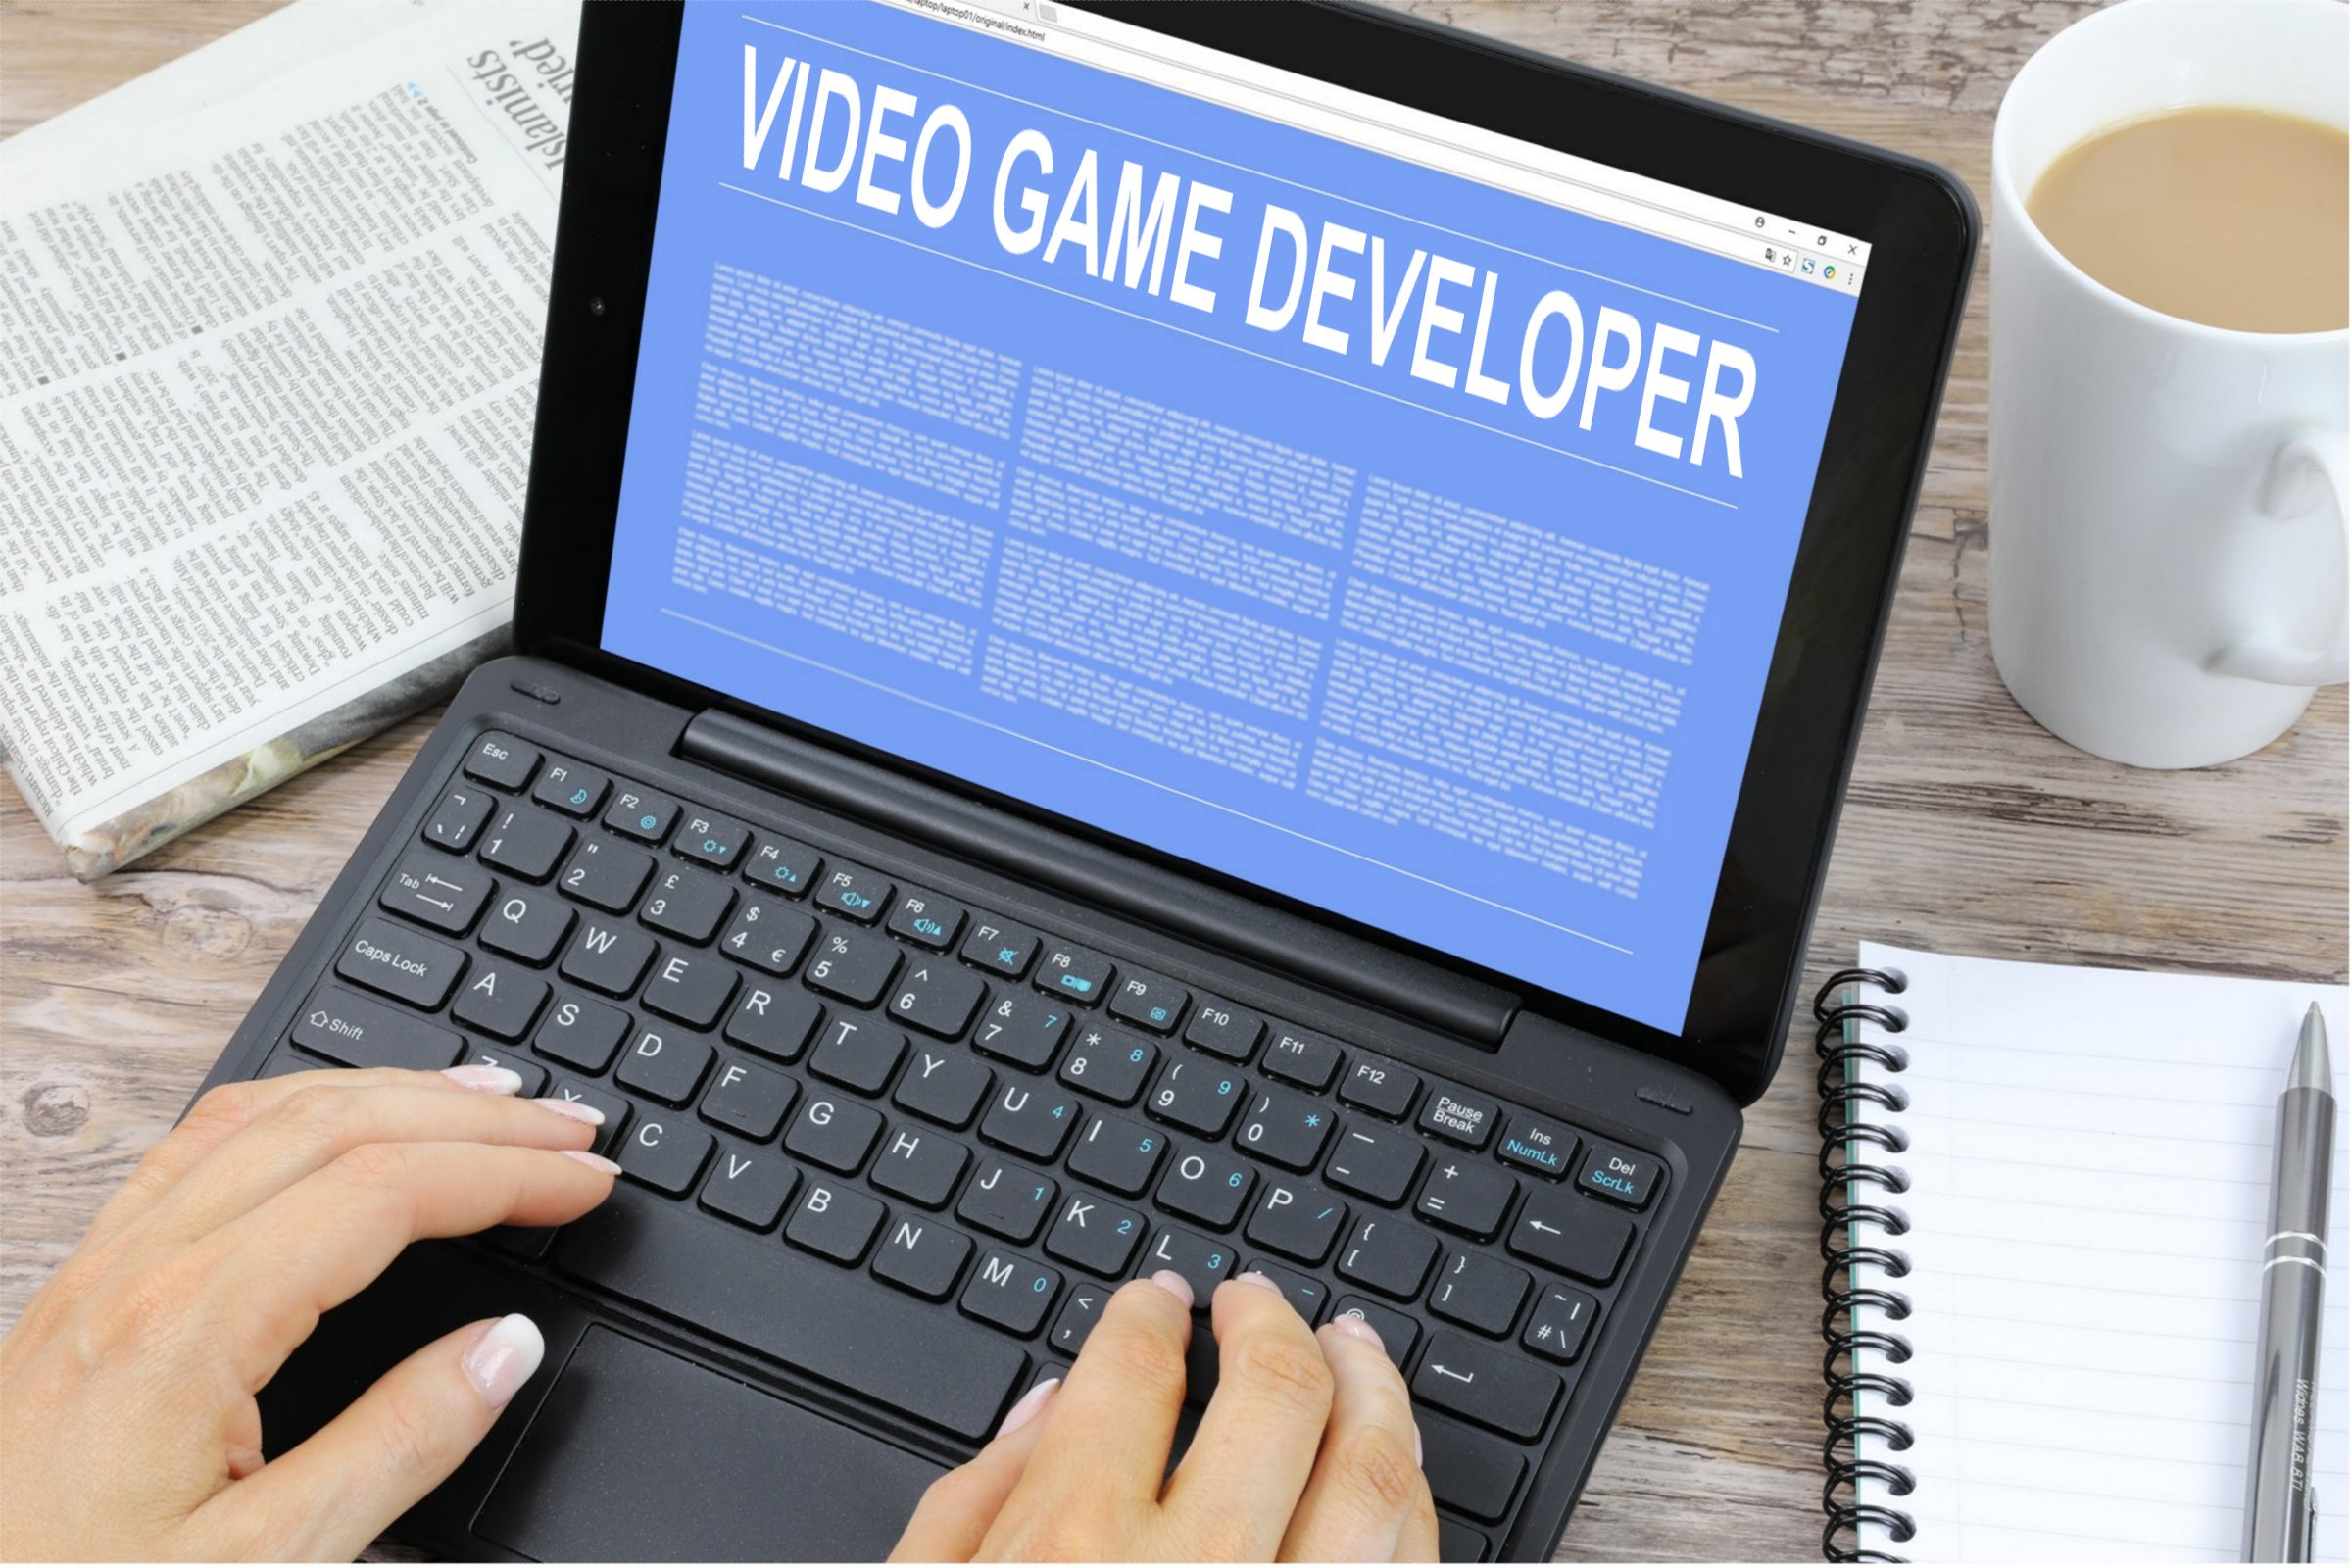 video game developer